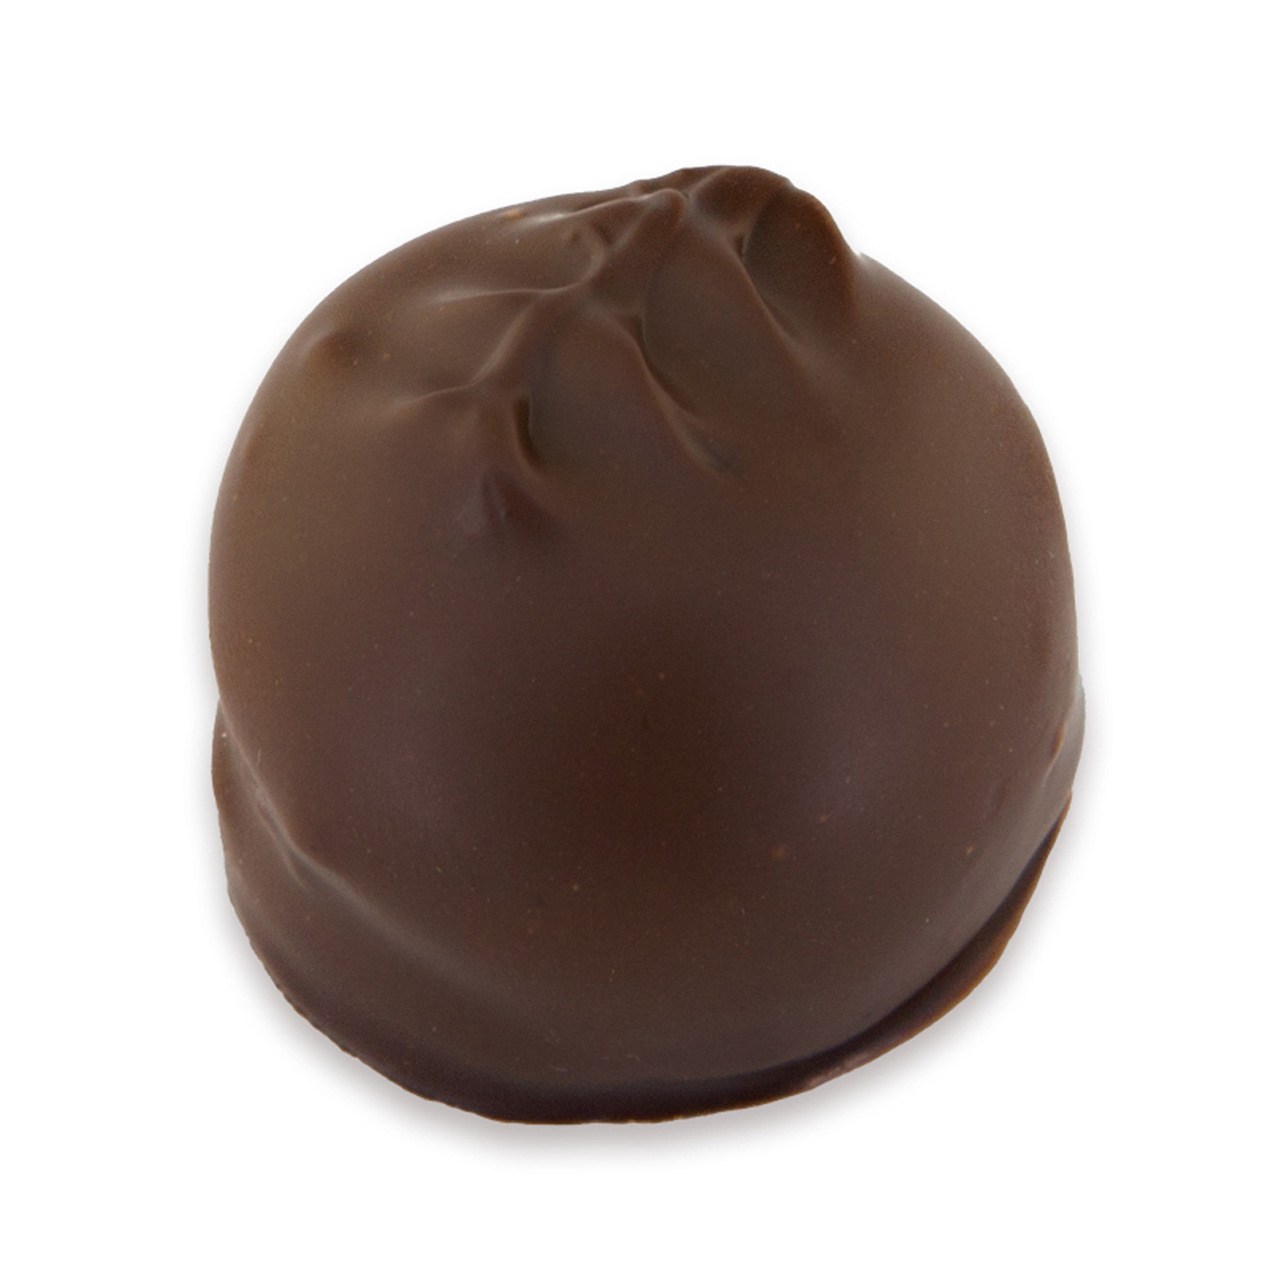 Melba chocolate bonbon